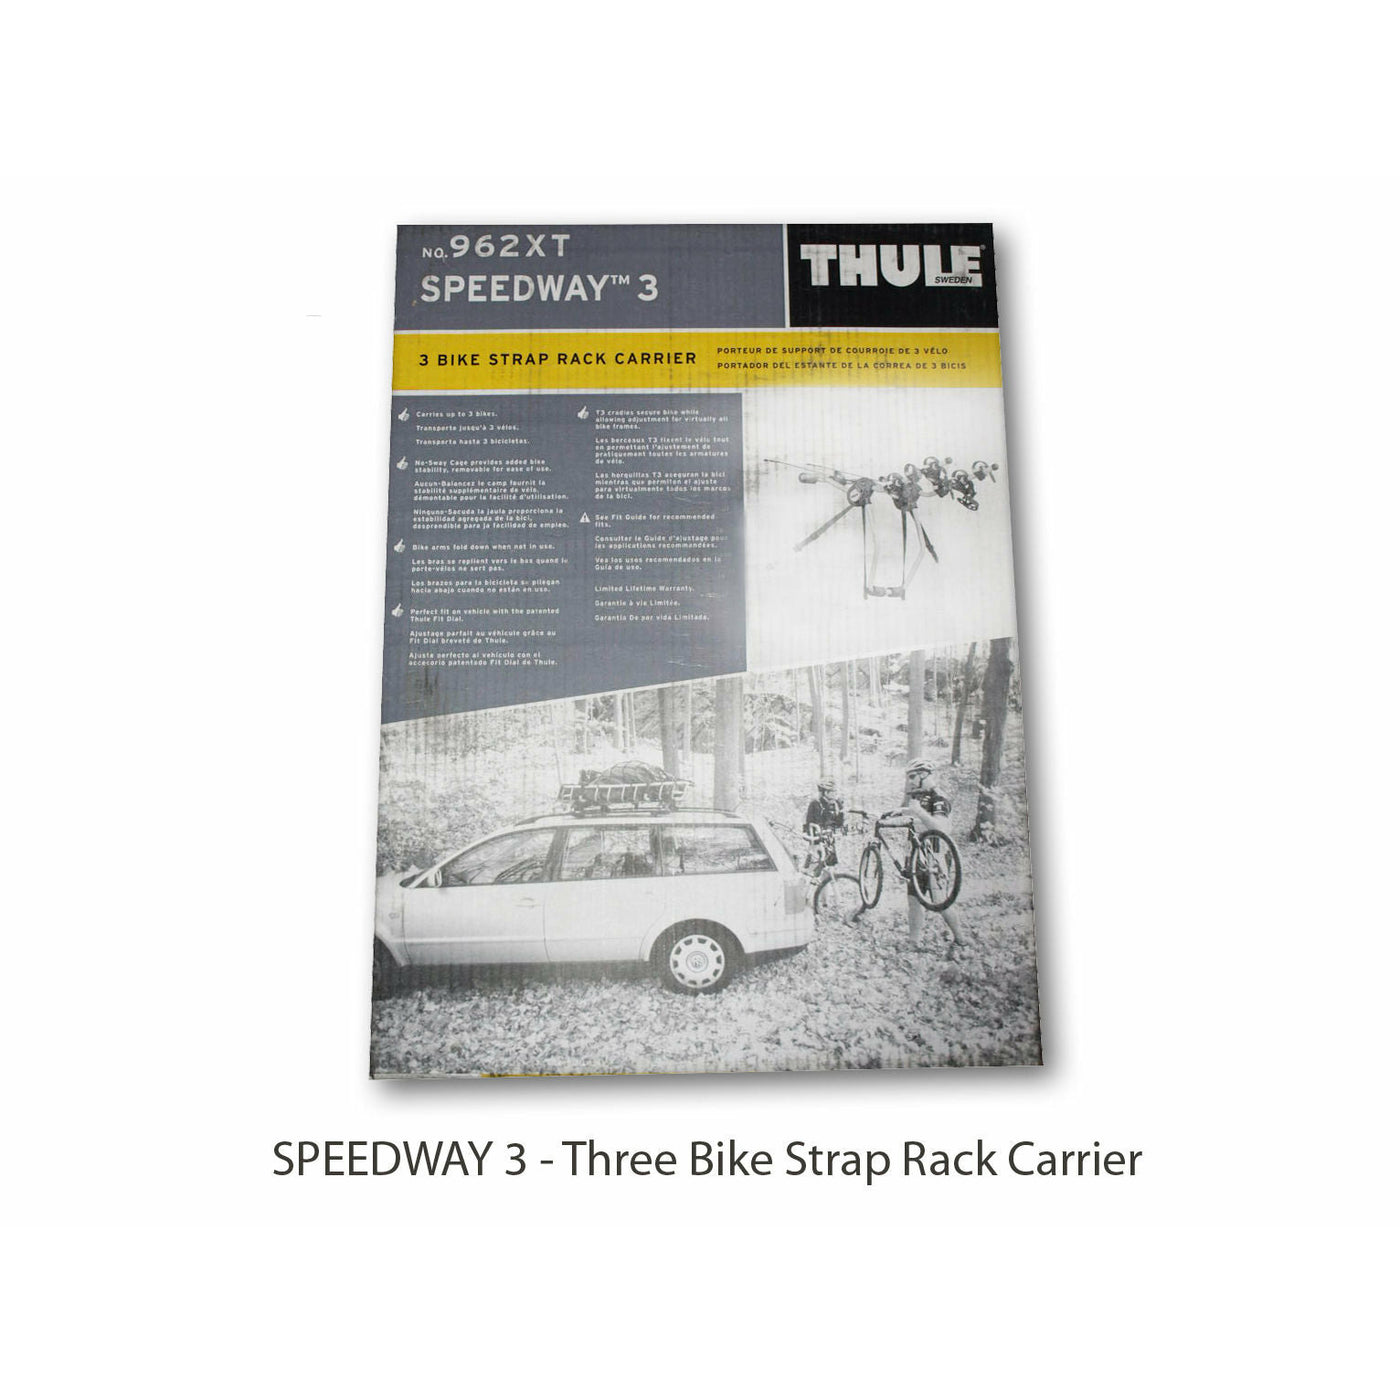 Thule Speedway 3 Trunk Rack 3  Bicycle Rack Carrier 962XT